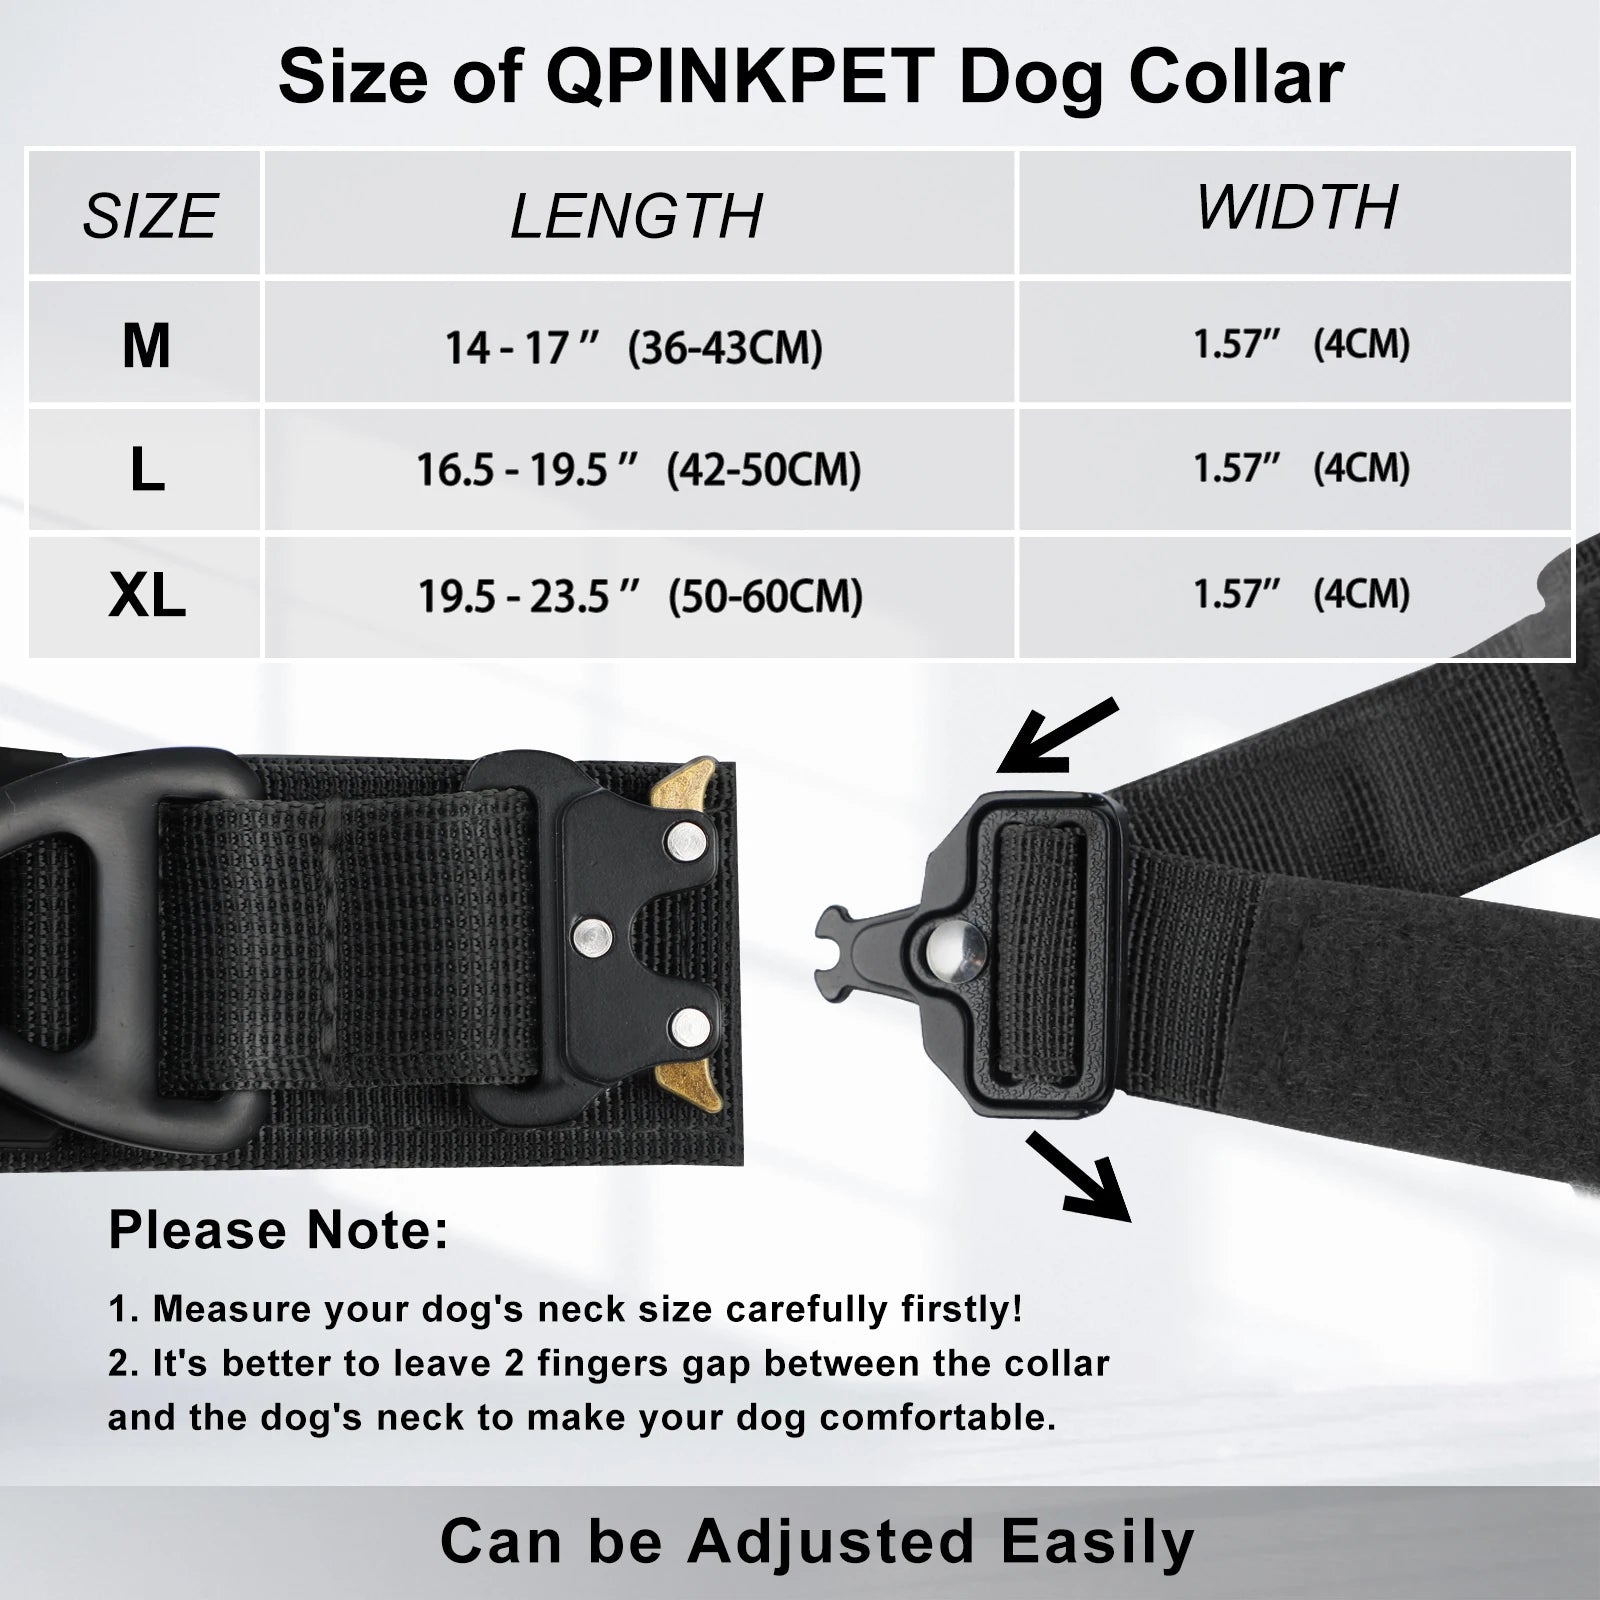 Tactical AirTag Dog Collar